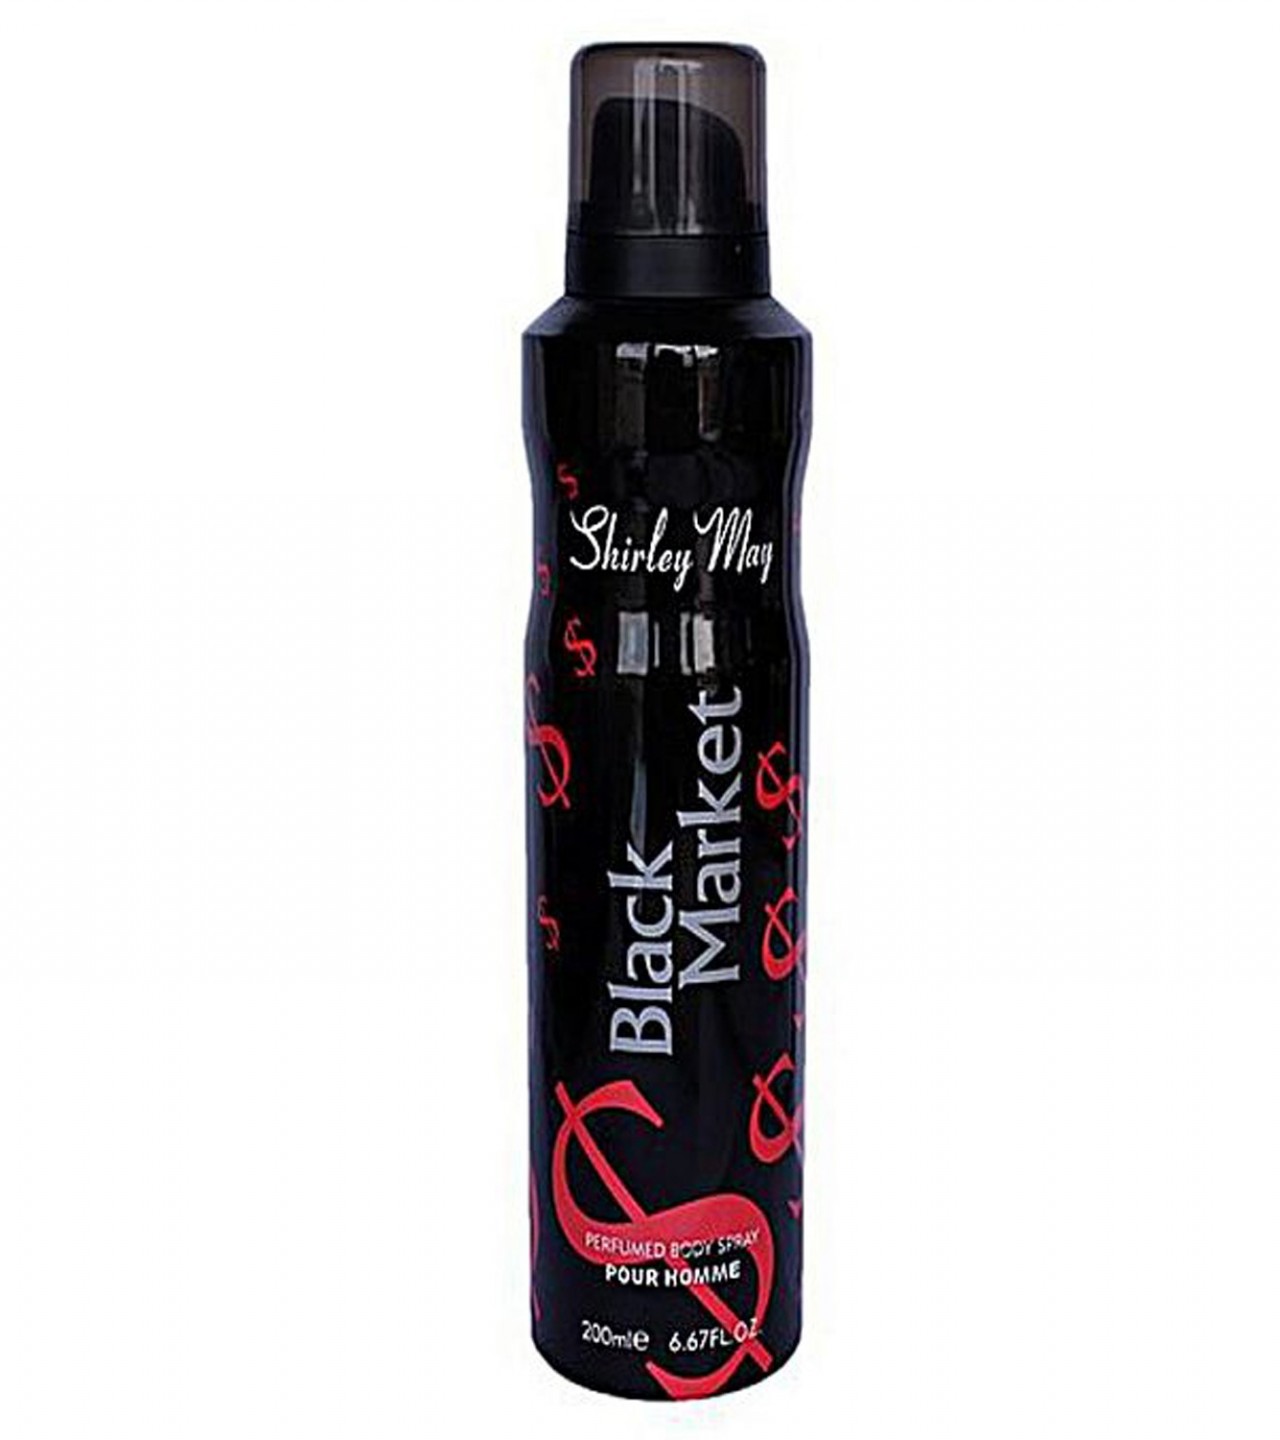 Shirley May Black Market Body Spray Deodorant For Men – 100 ml